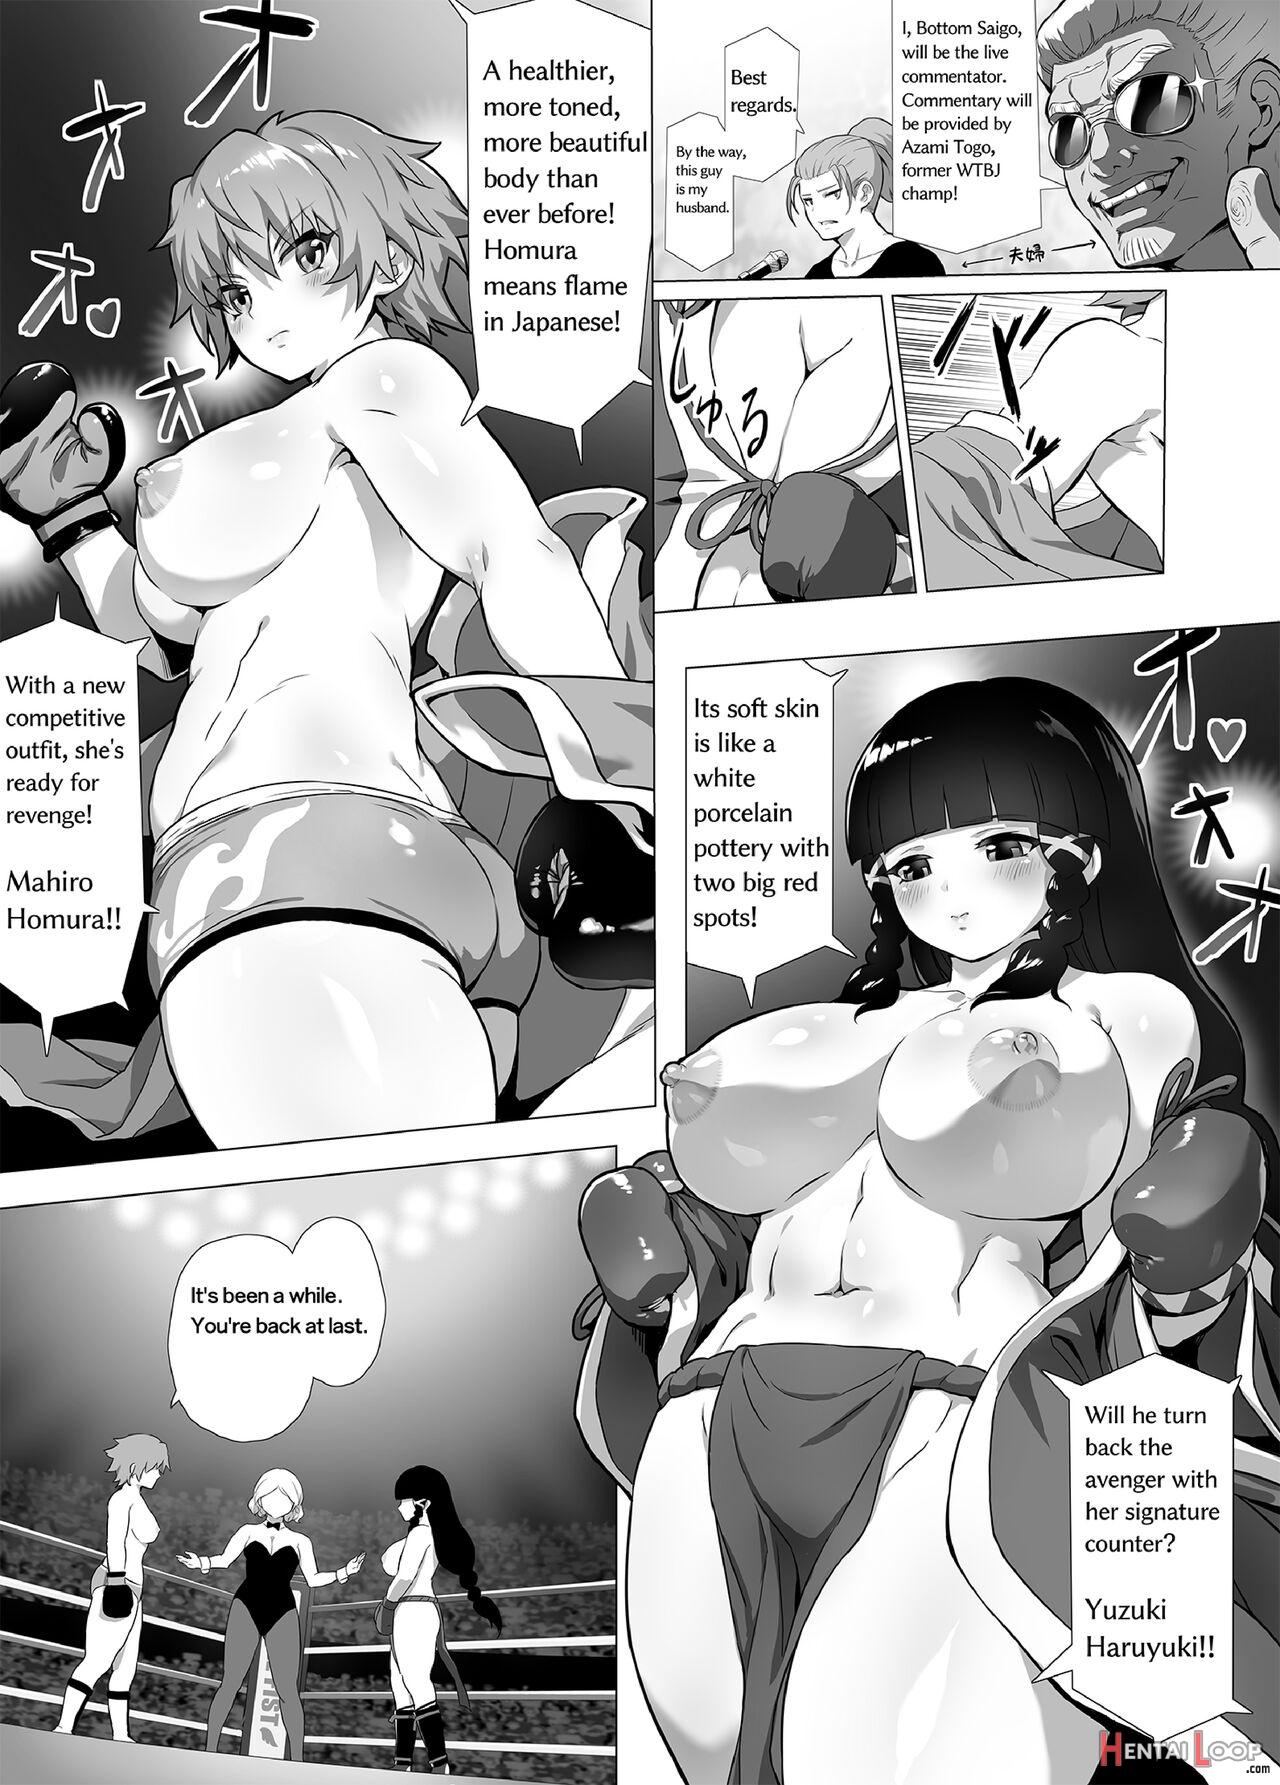 Mahiro Standup! Manga Ver. ~an New Foe Appears! Meet The Lovely Yuzuki~ page 17